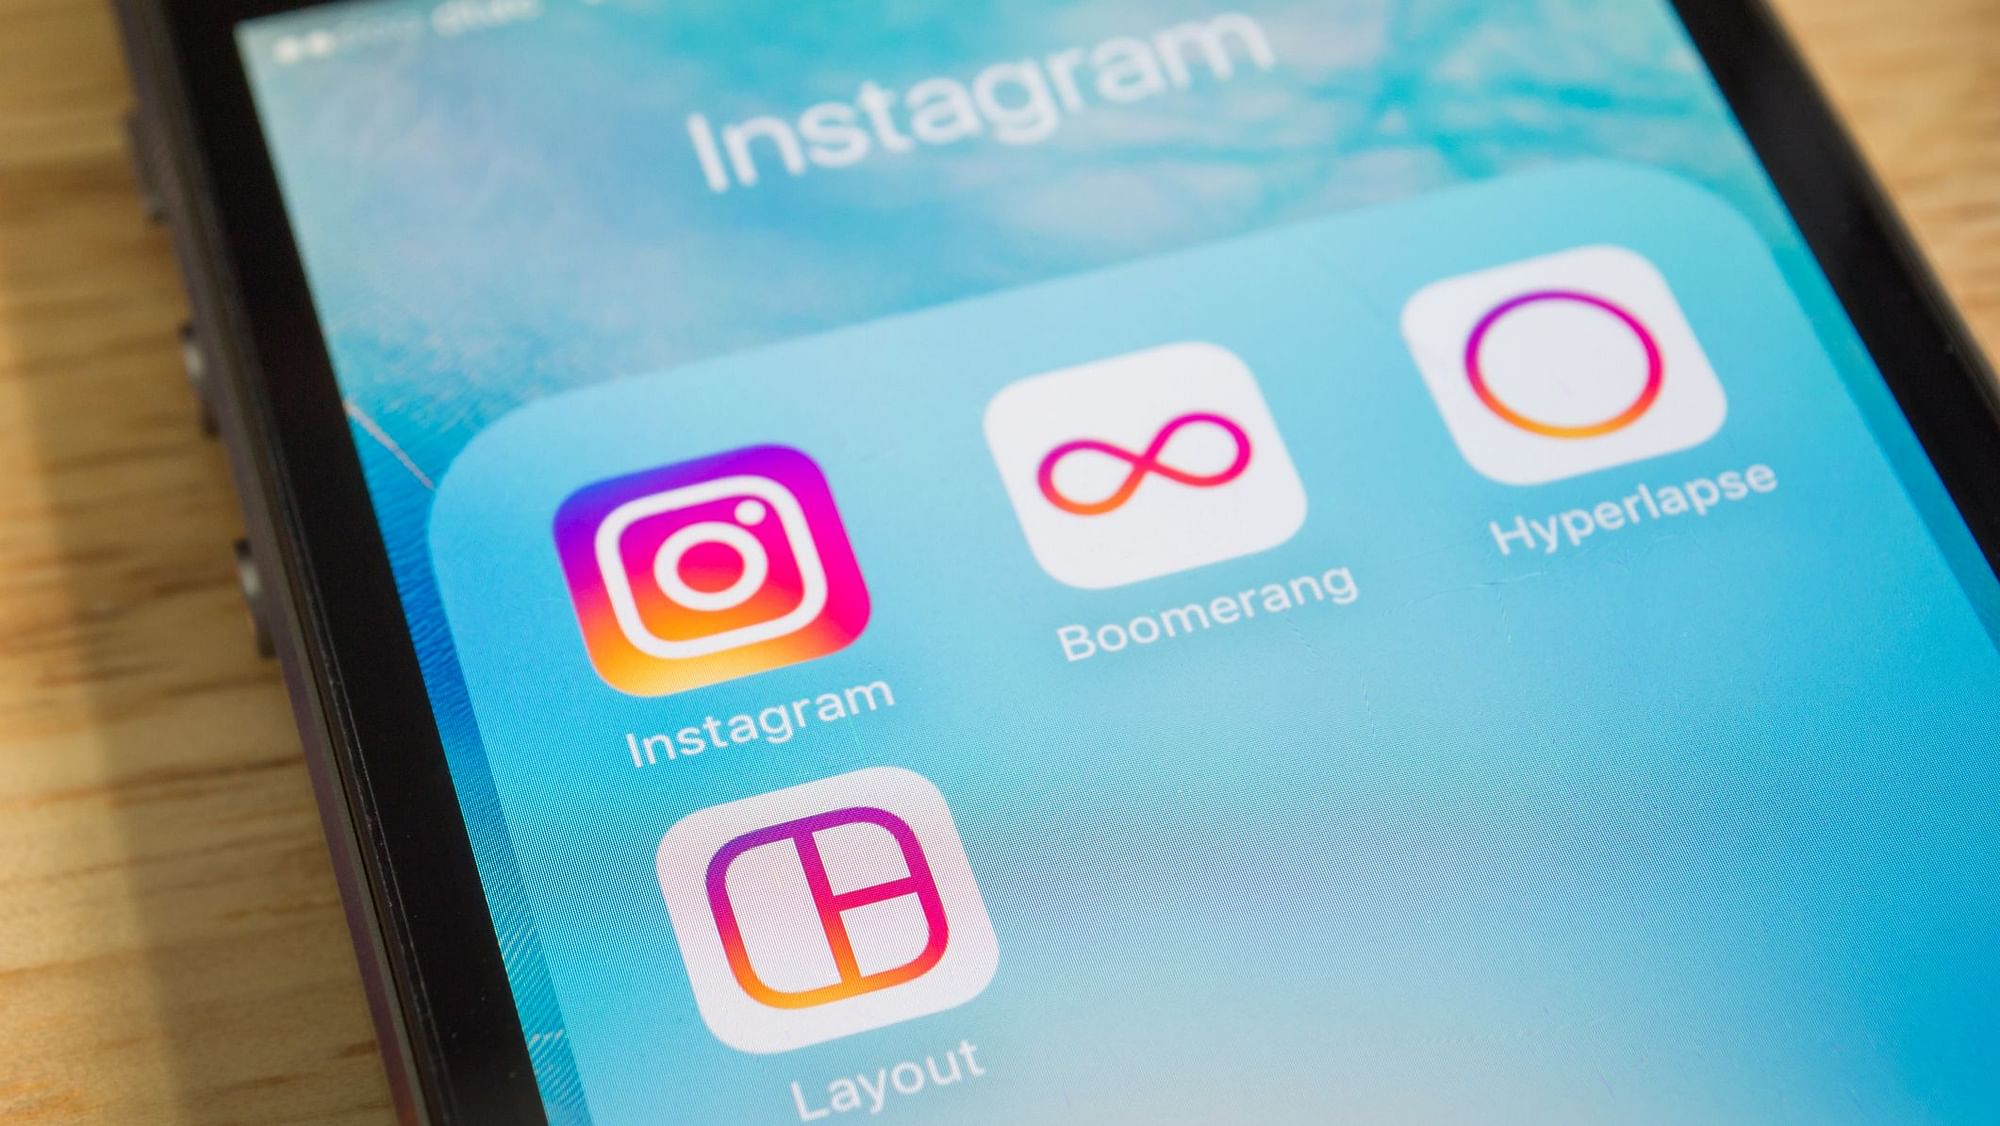 Instagram will no longer be seen as a photo-sharing platform.